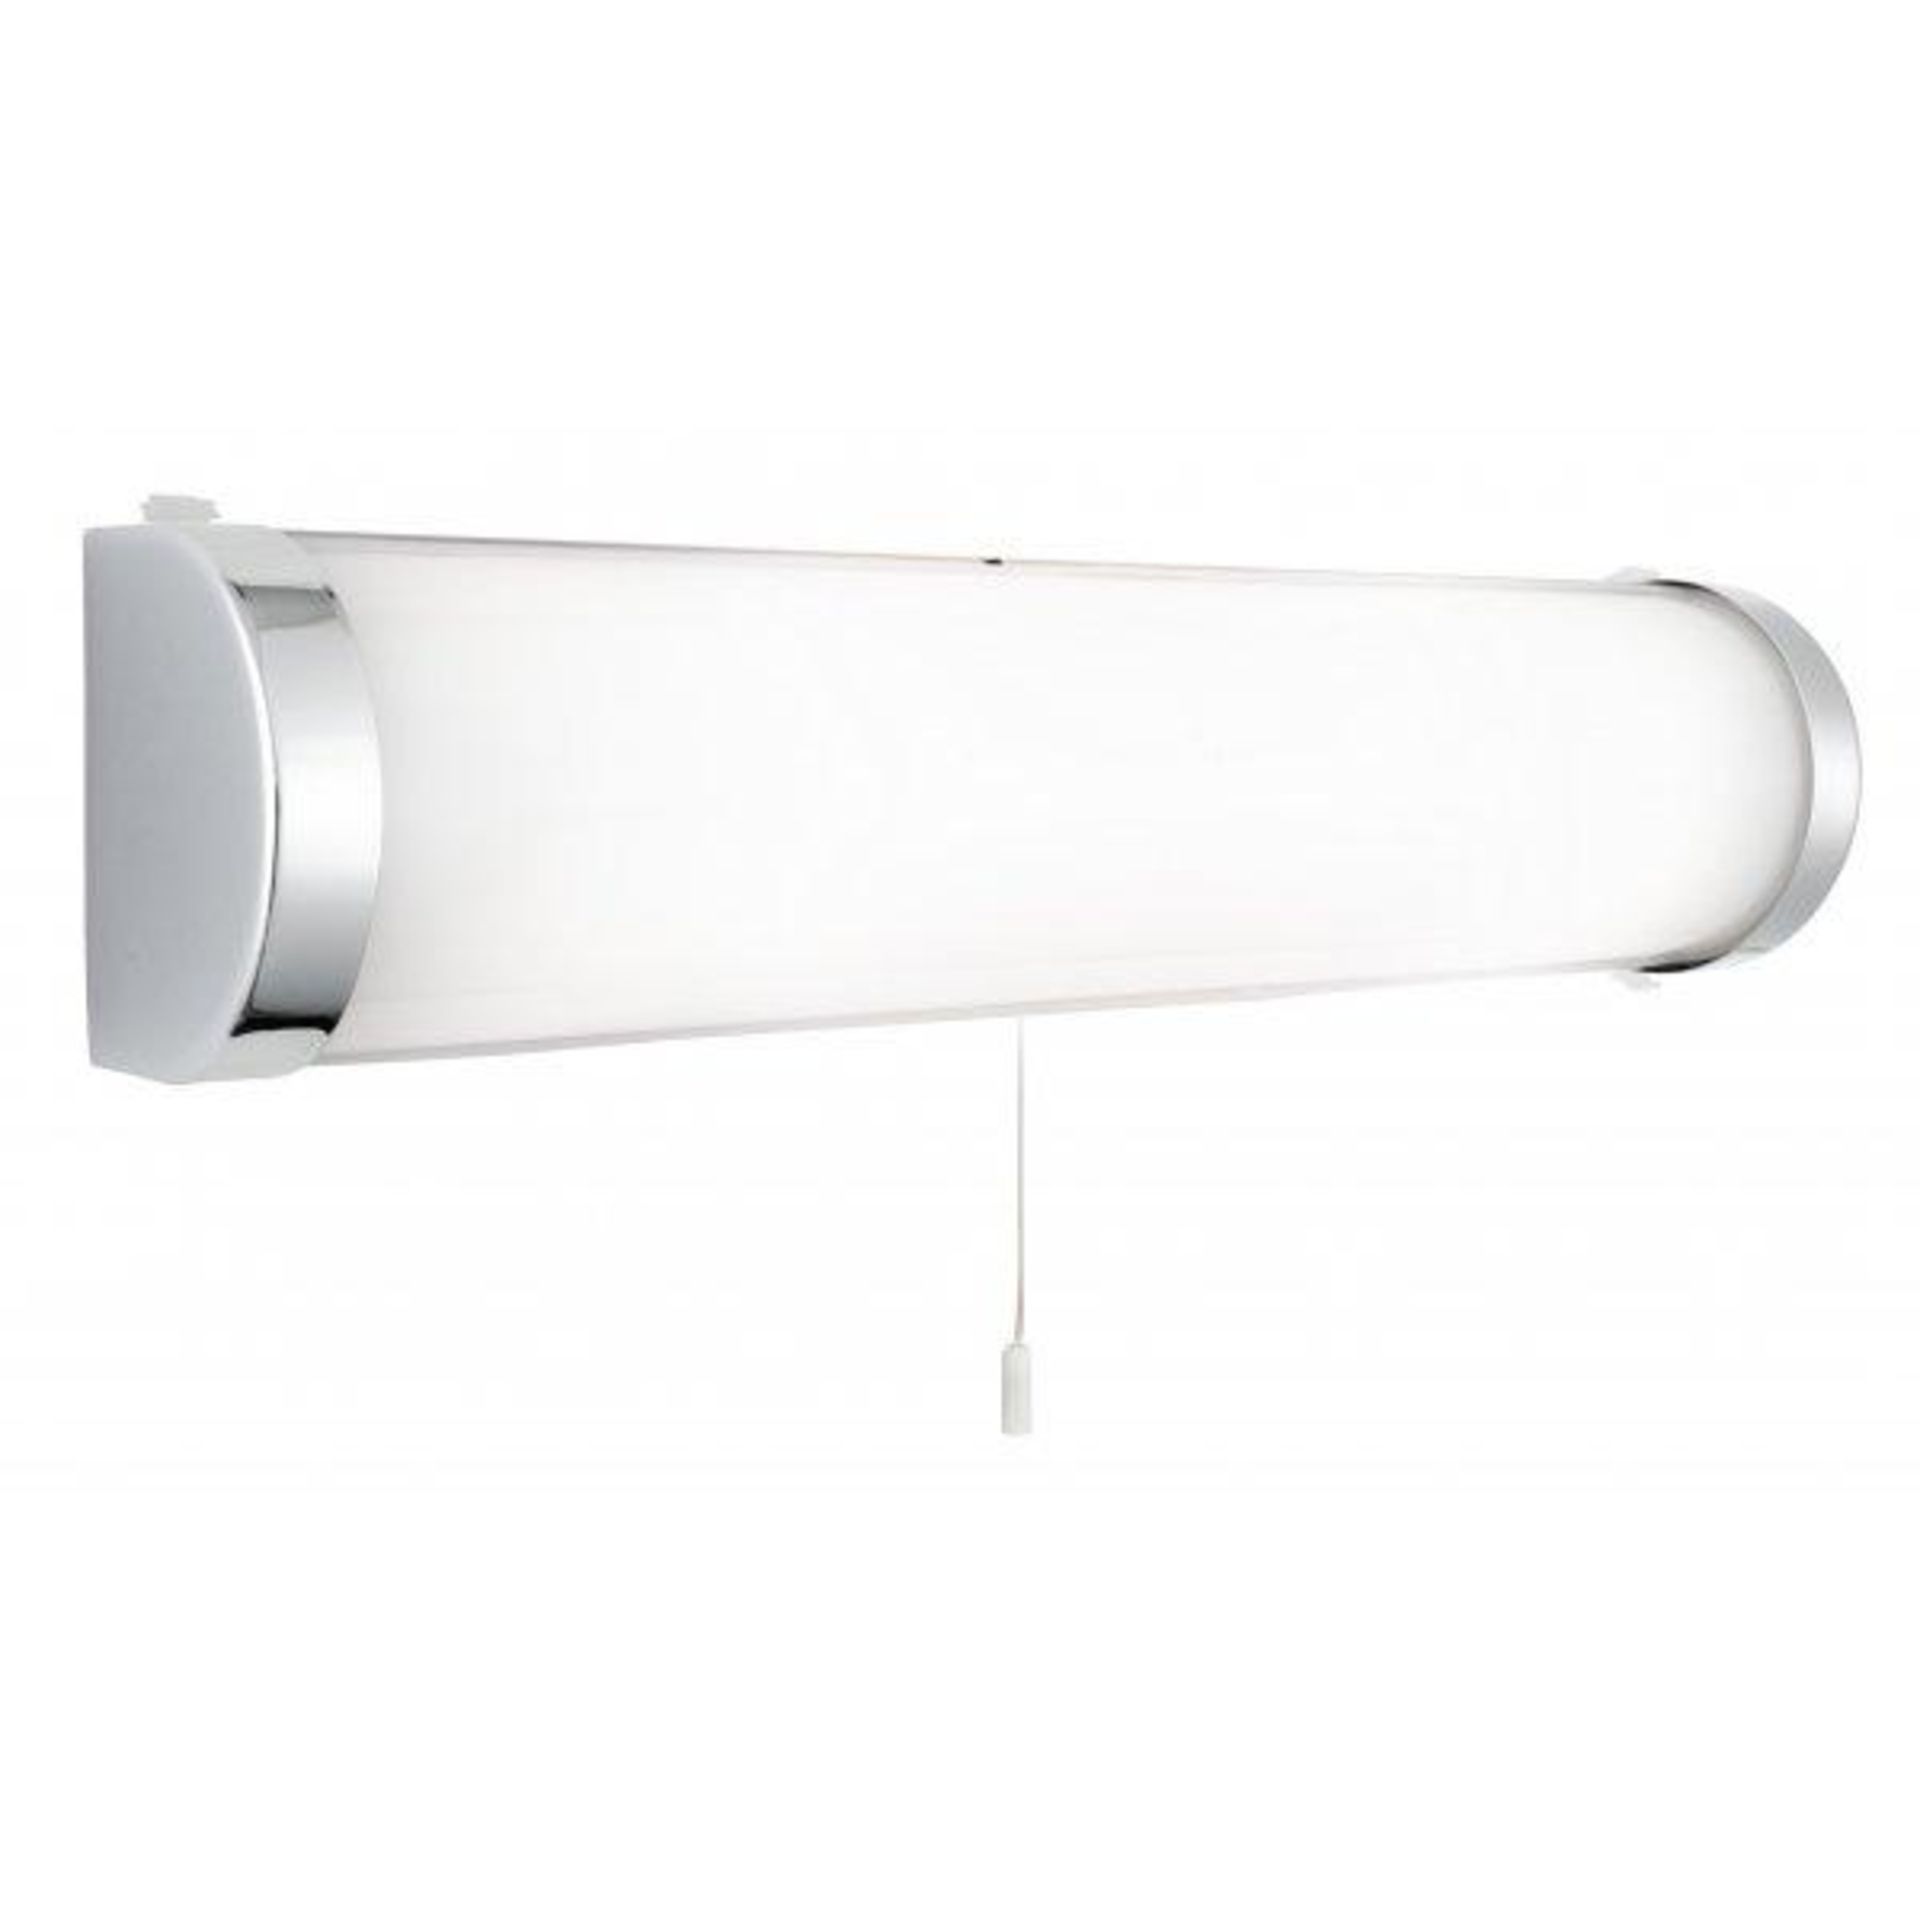 1 x Bathroom Lighting 2 Light Wall Light Polished Chrome - New Boxed Stock - CL364 - Ref: PAL Edin/1